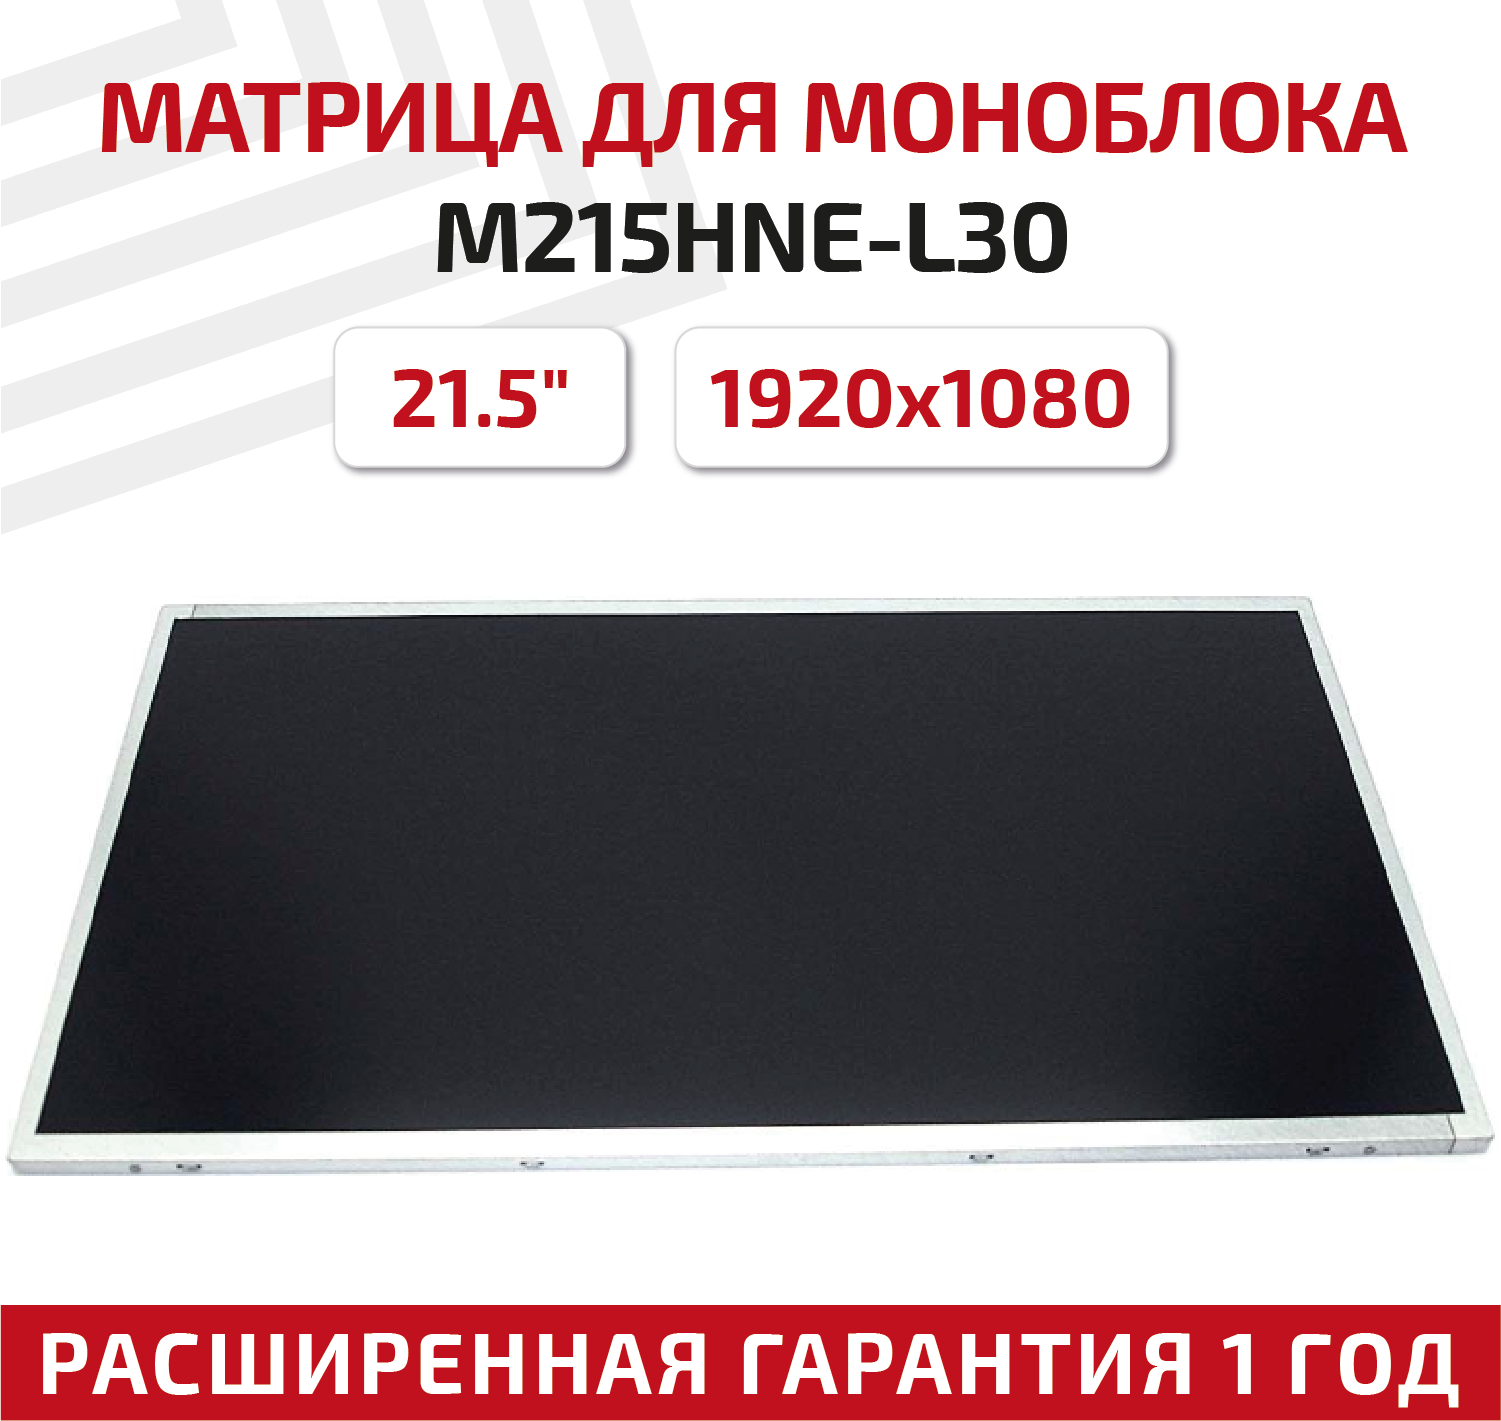 Матрица для моноблока M215HNE-L30 rev. C1 21.5" 1920x1080 светодиодная (LED) матовая